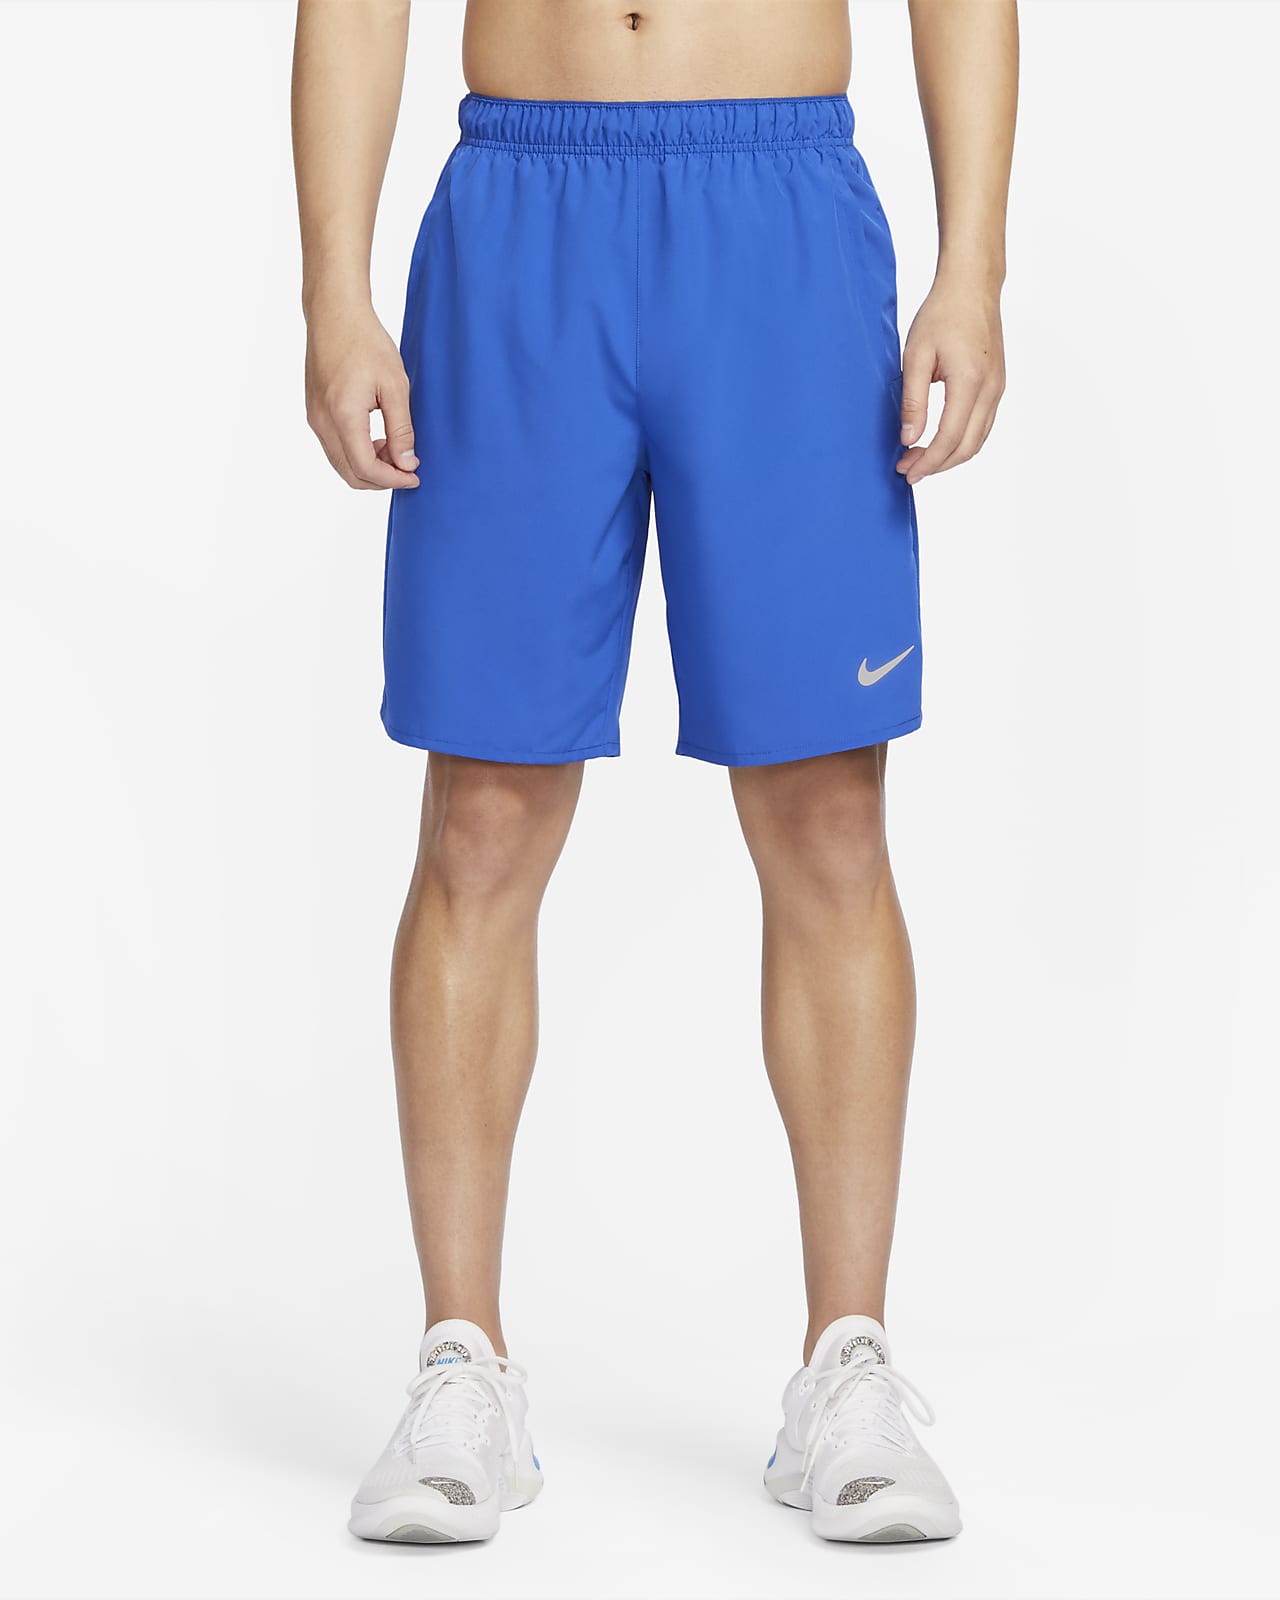 Nike Challenger Pantalón corto Dri-FIT versátil de 23 cm sin forro - Hombre